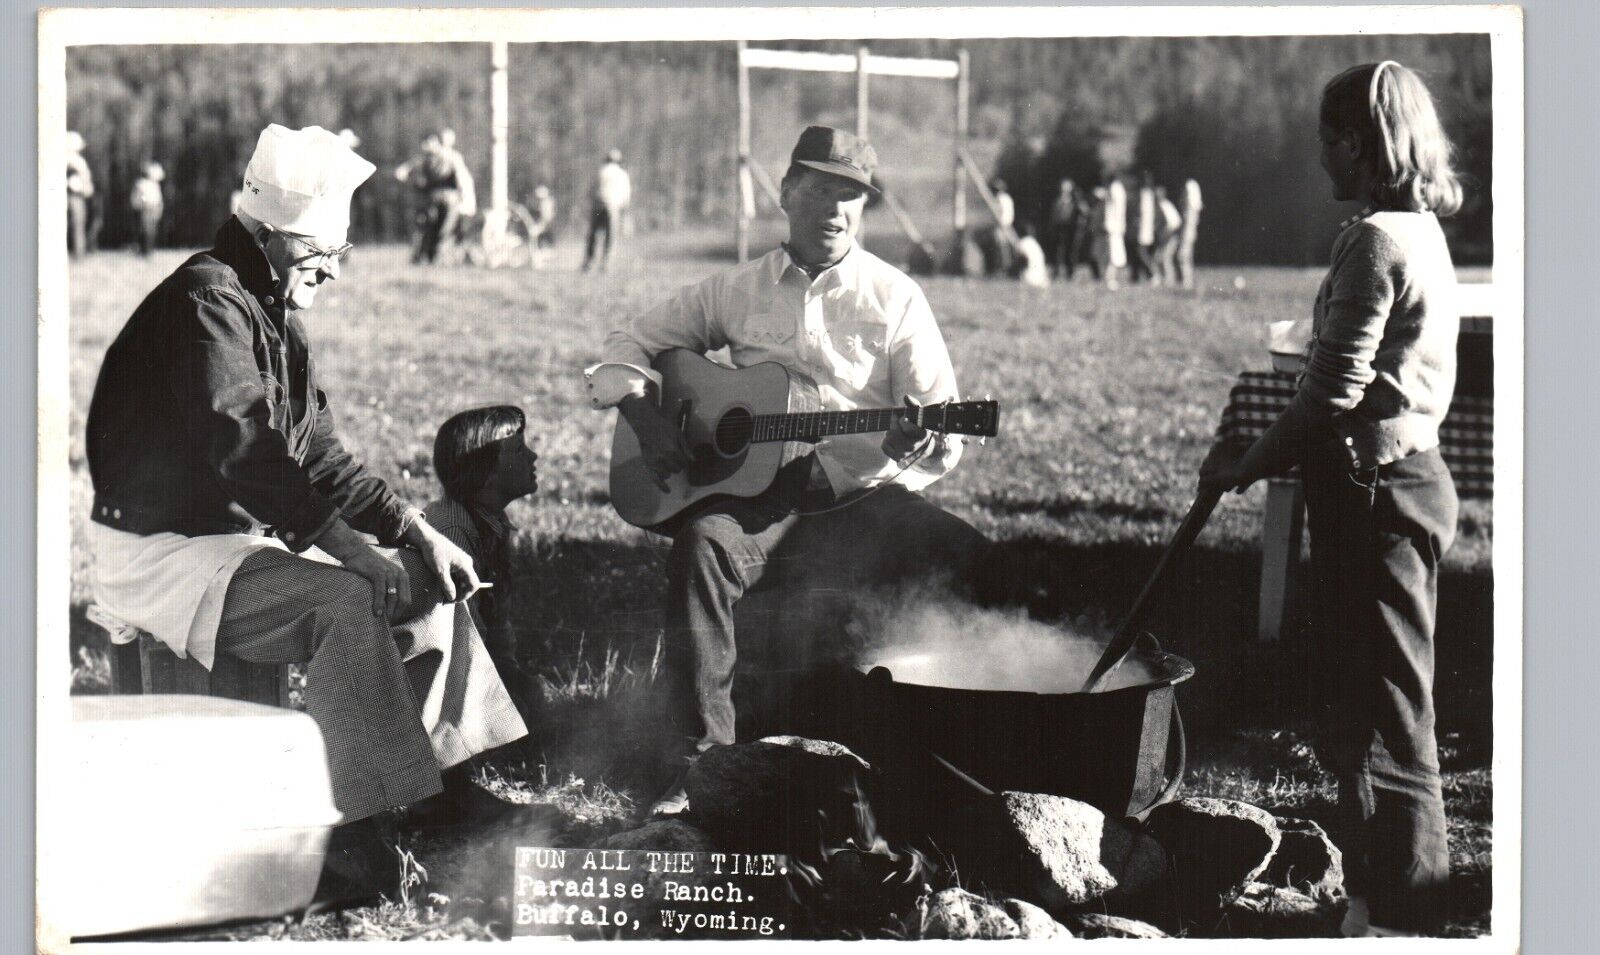 PARADISE RANCH GUITAR CAMP FIRE buffalo wy real photo postcard wyoming history